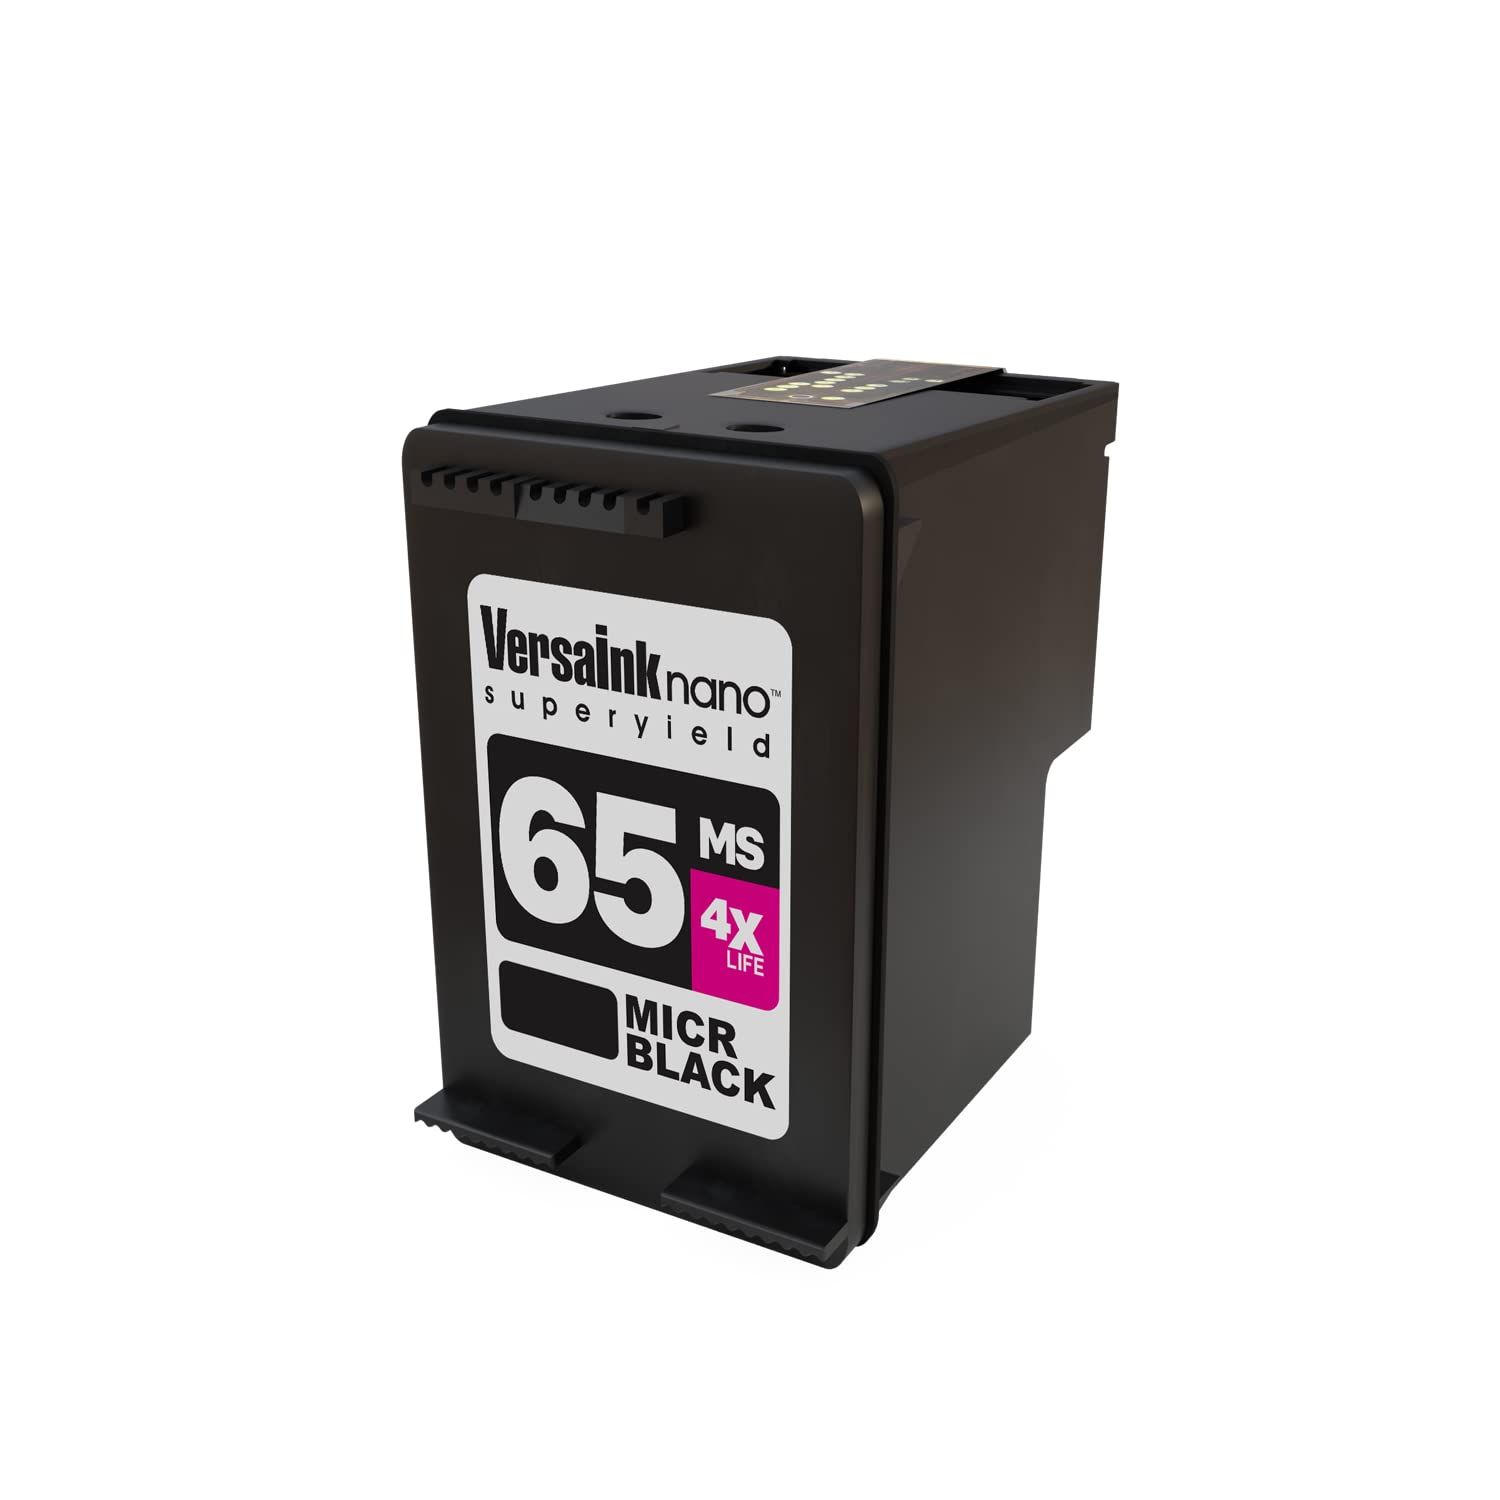 VersaInk-Nano 65 MSe MICR Black Ink Cartridge for Check Printing